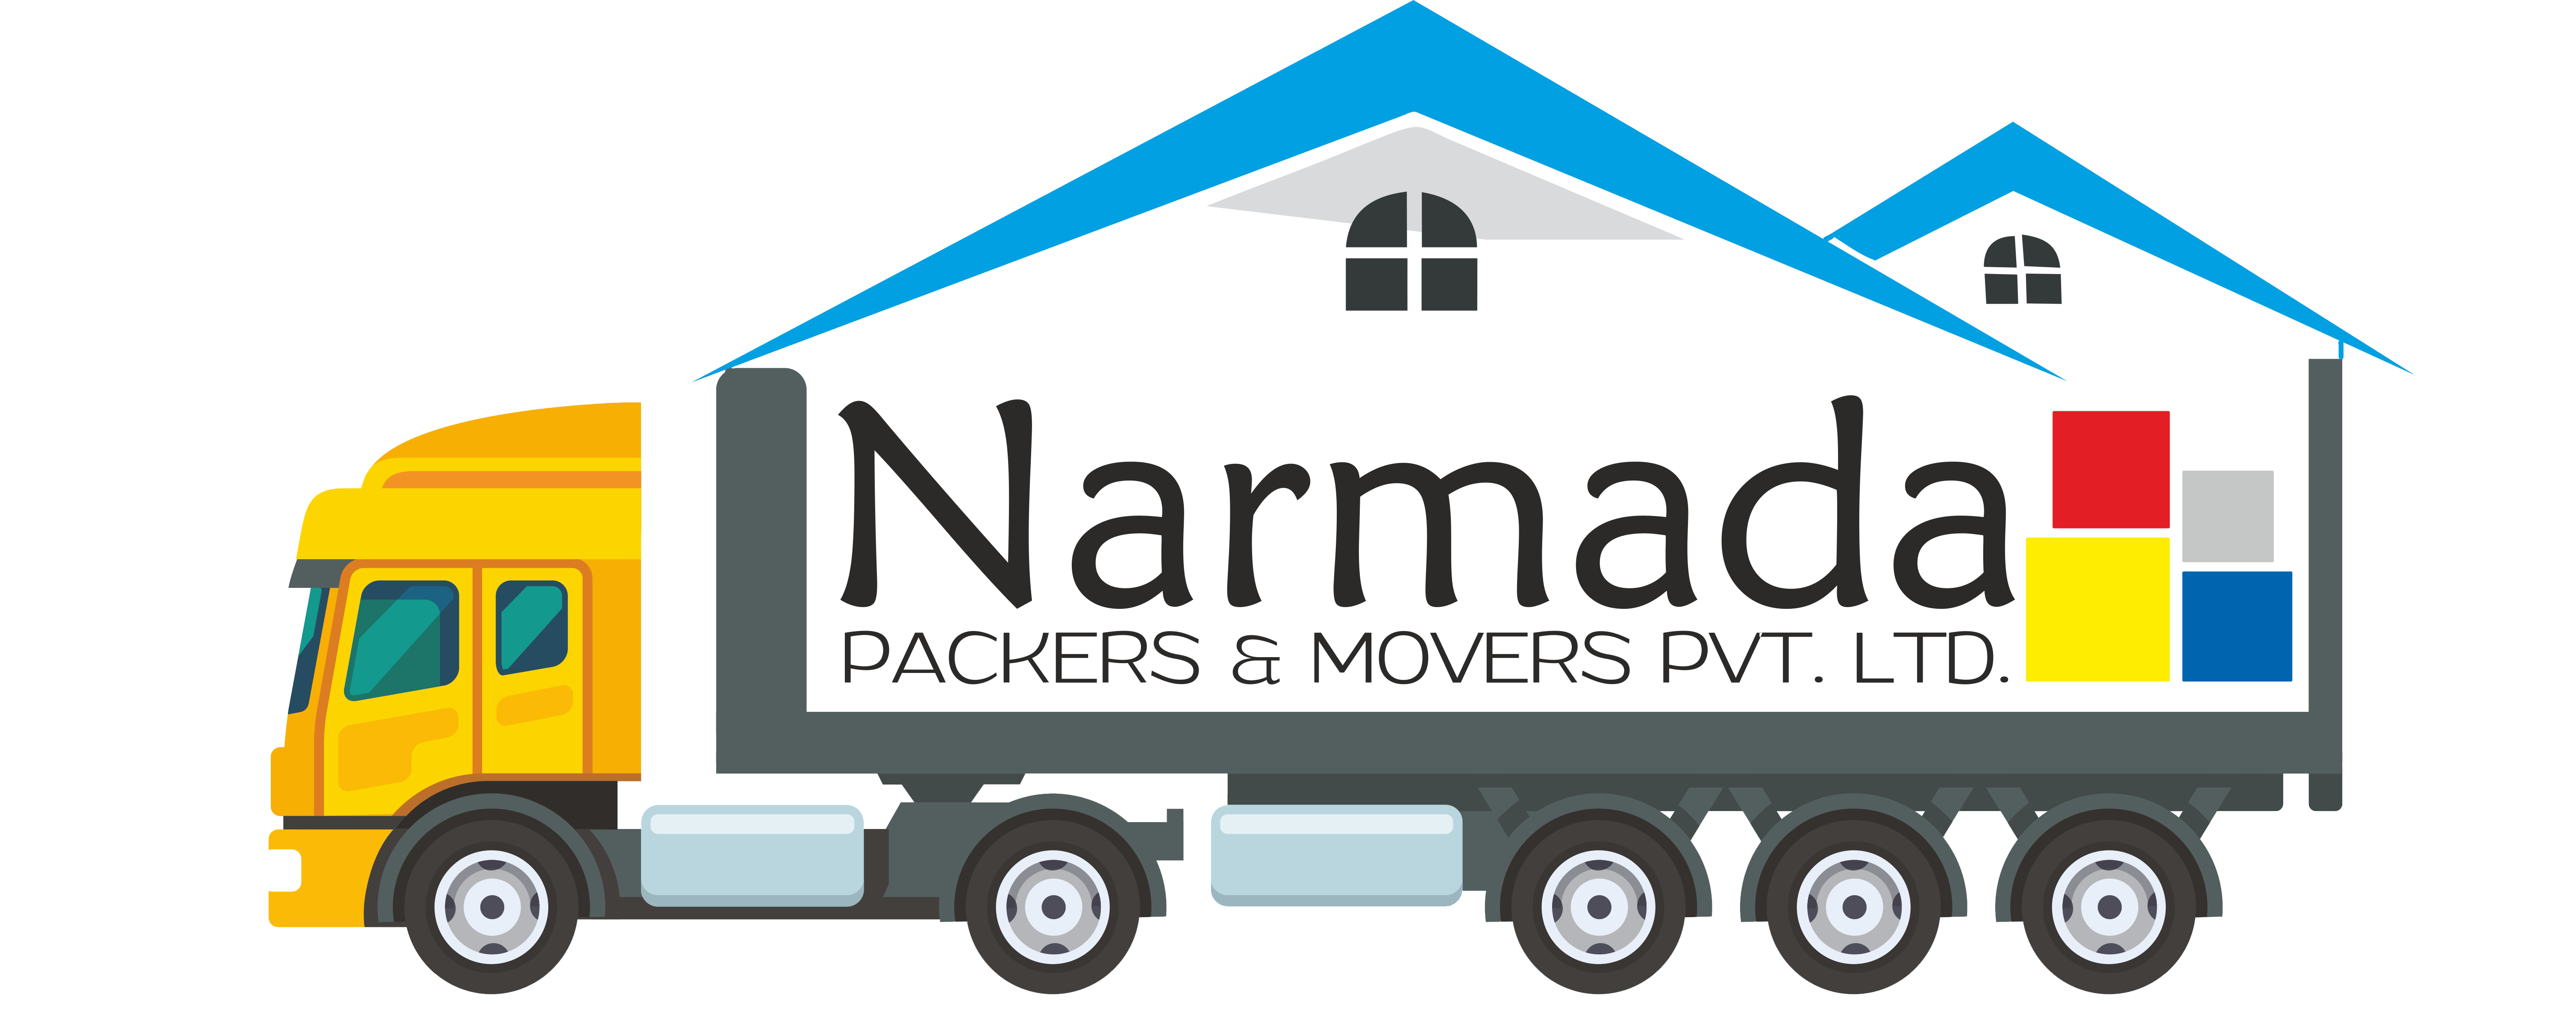 Narmada Packers & Movers Pvt. Ltd.